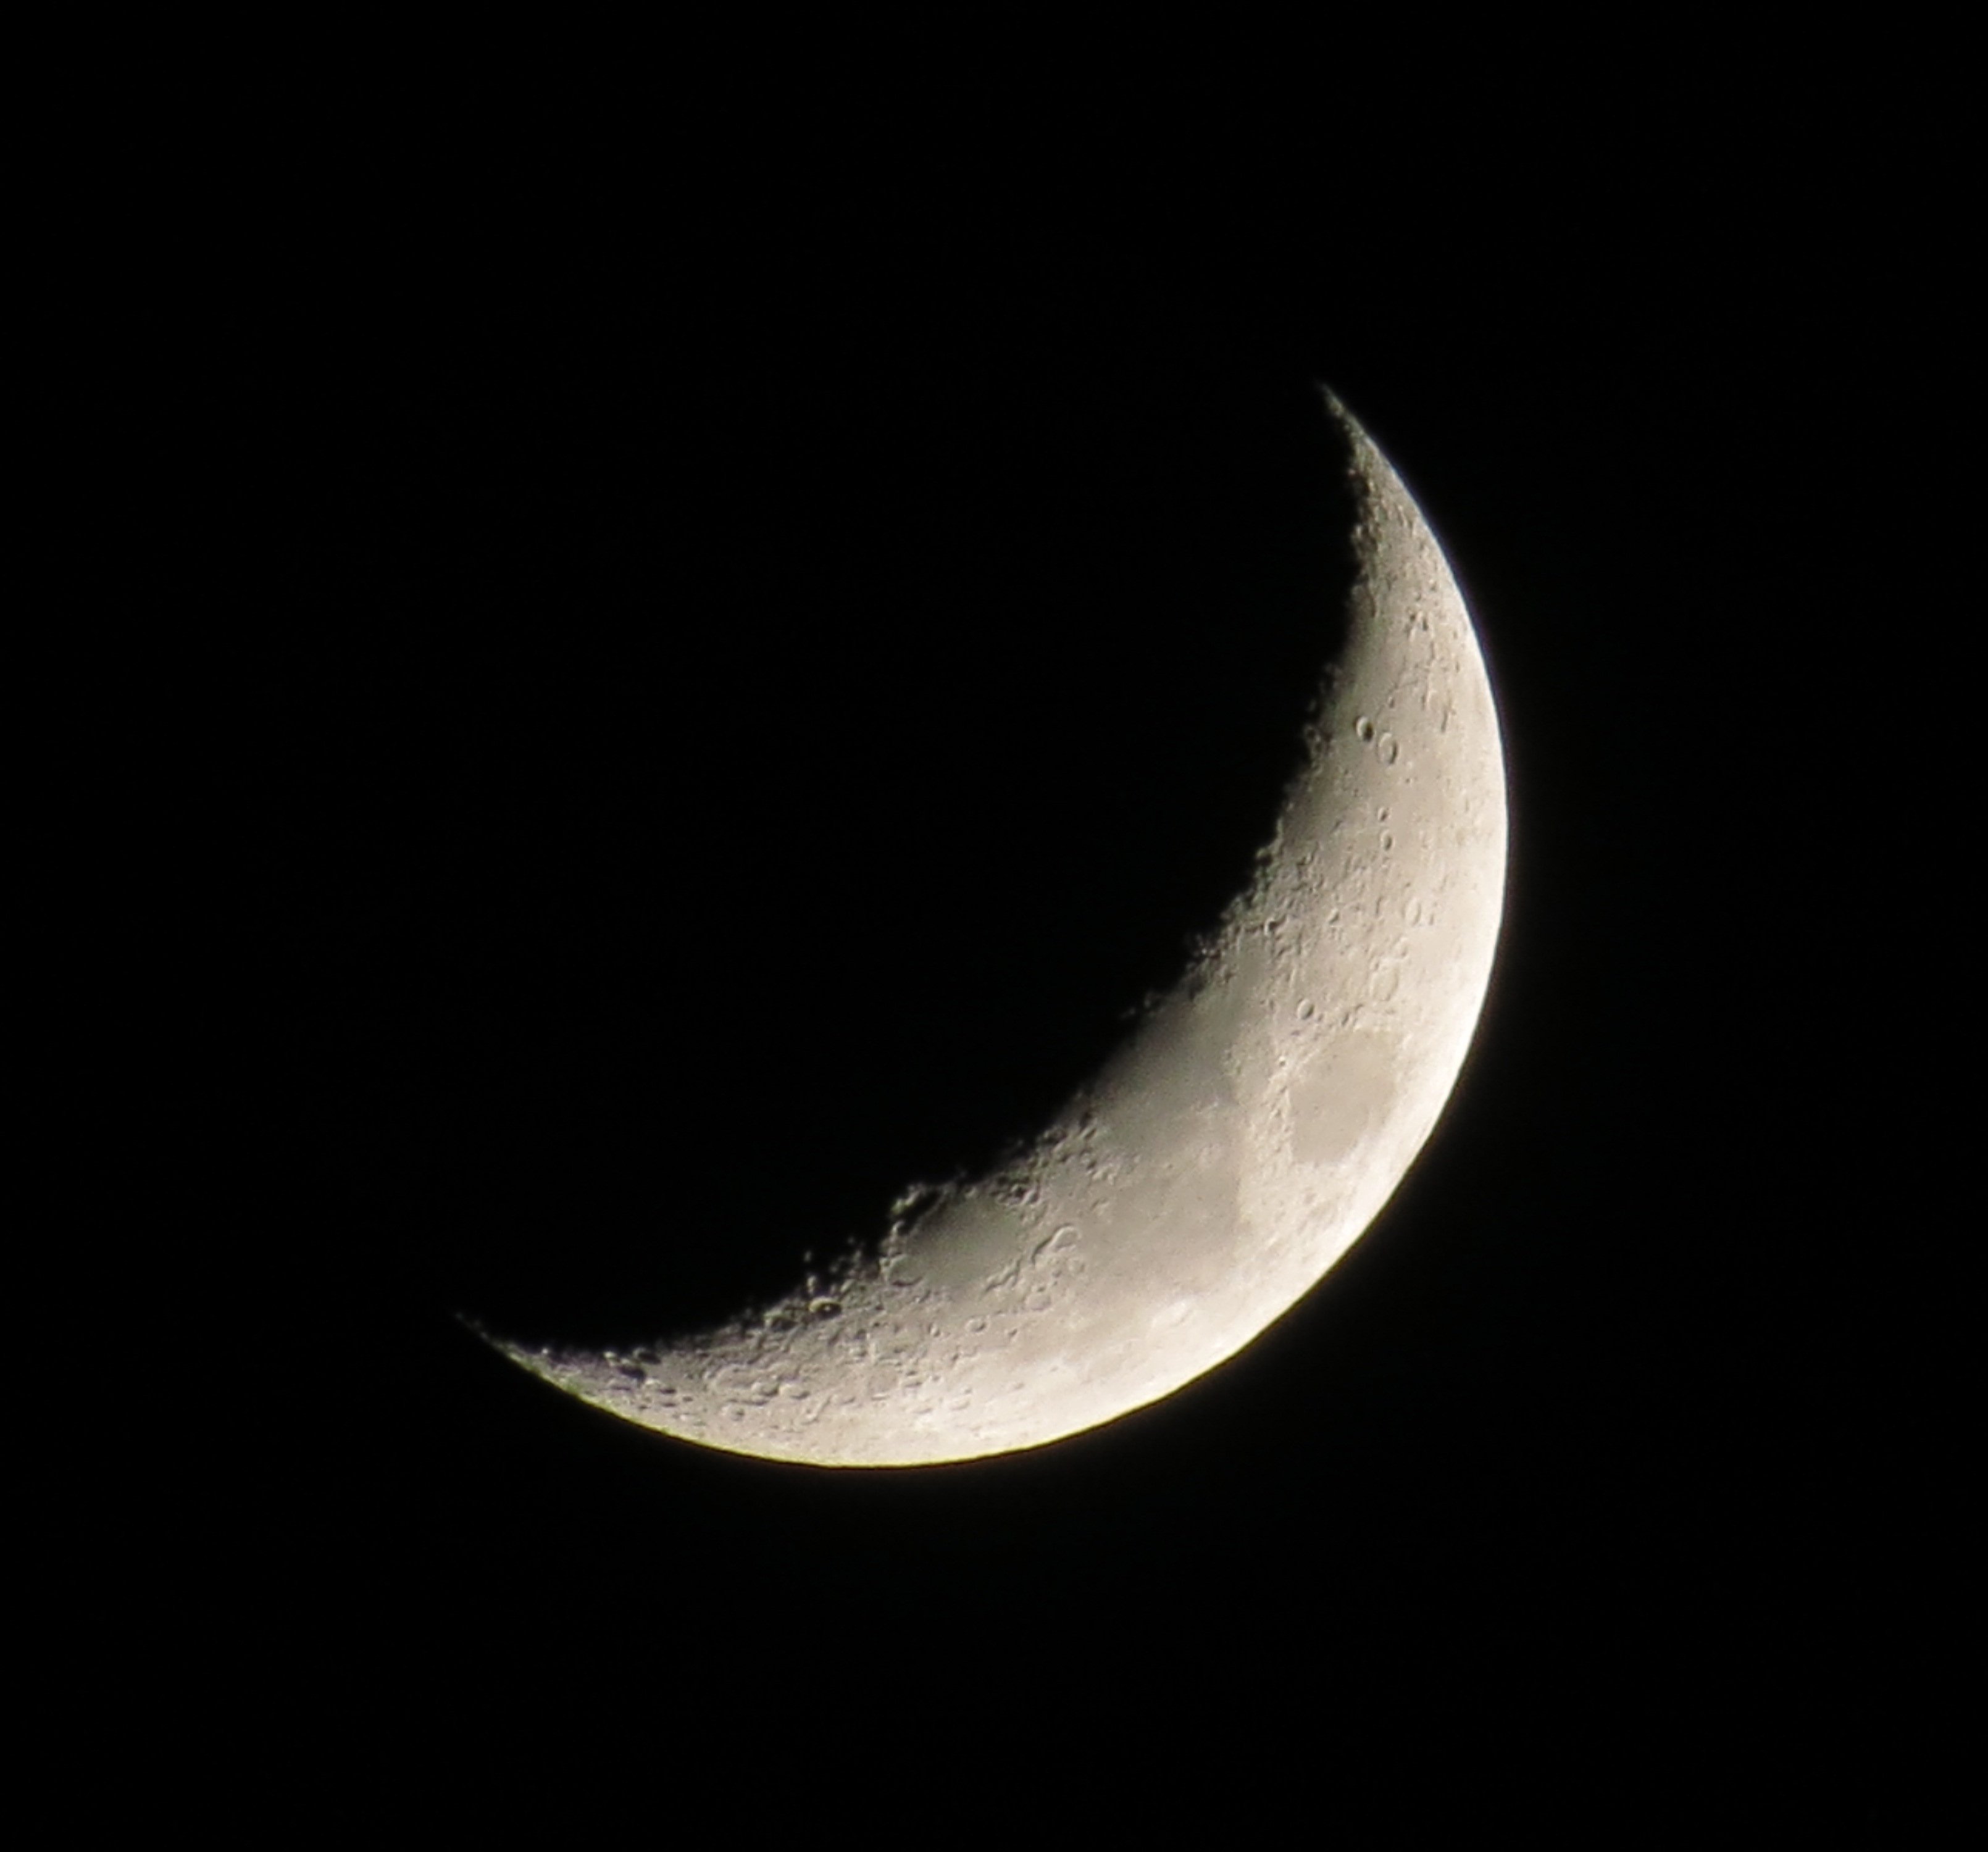 Photograph of a crescent moon | Source: Shutterstock